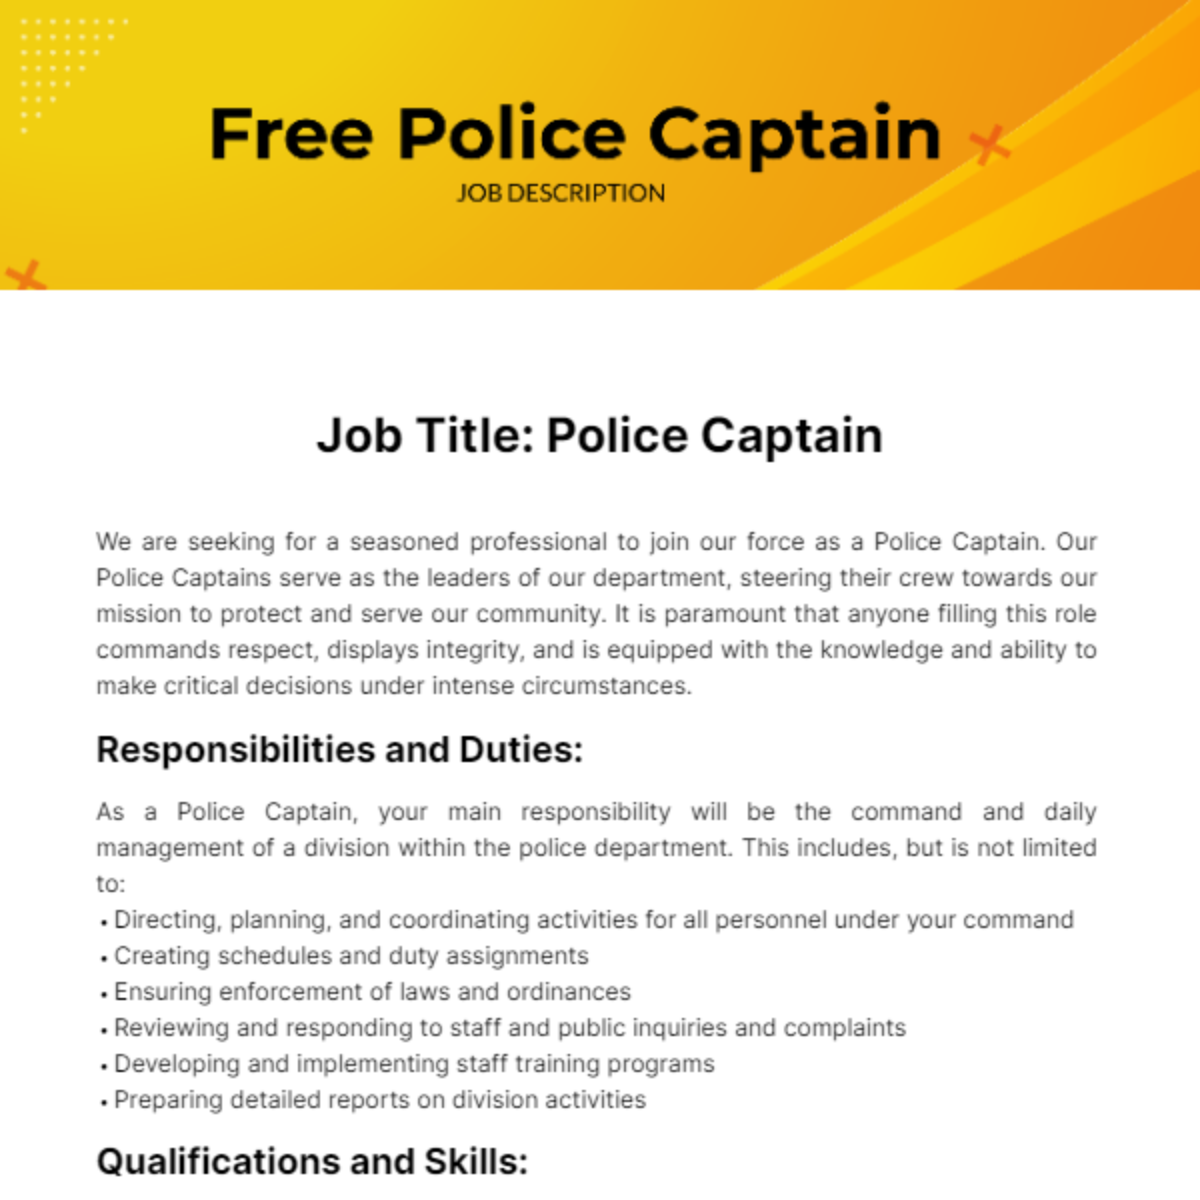 Free Police Captain Job Description Template